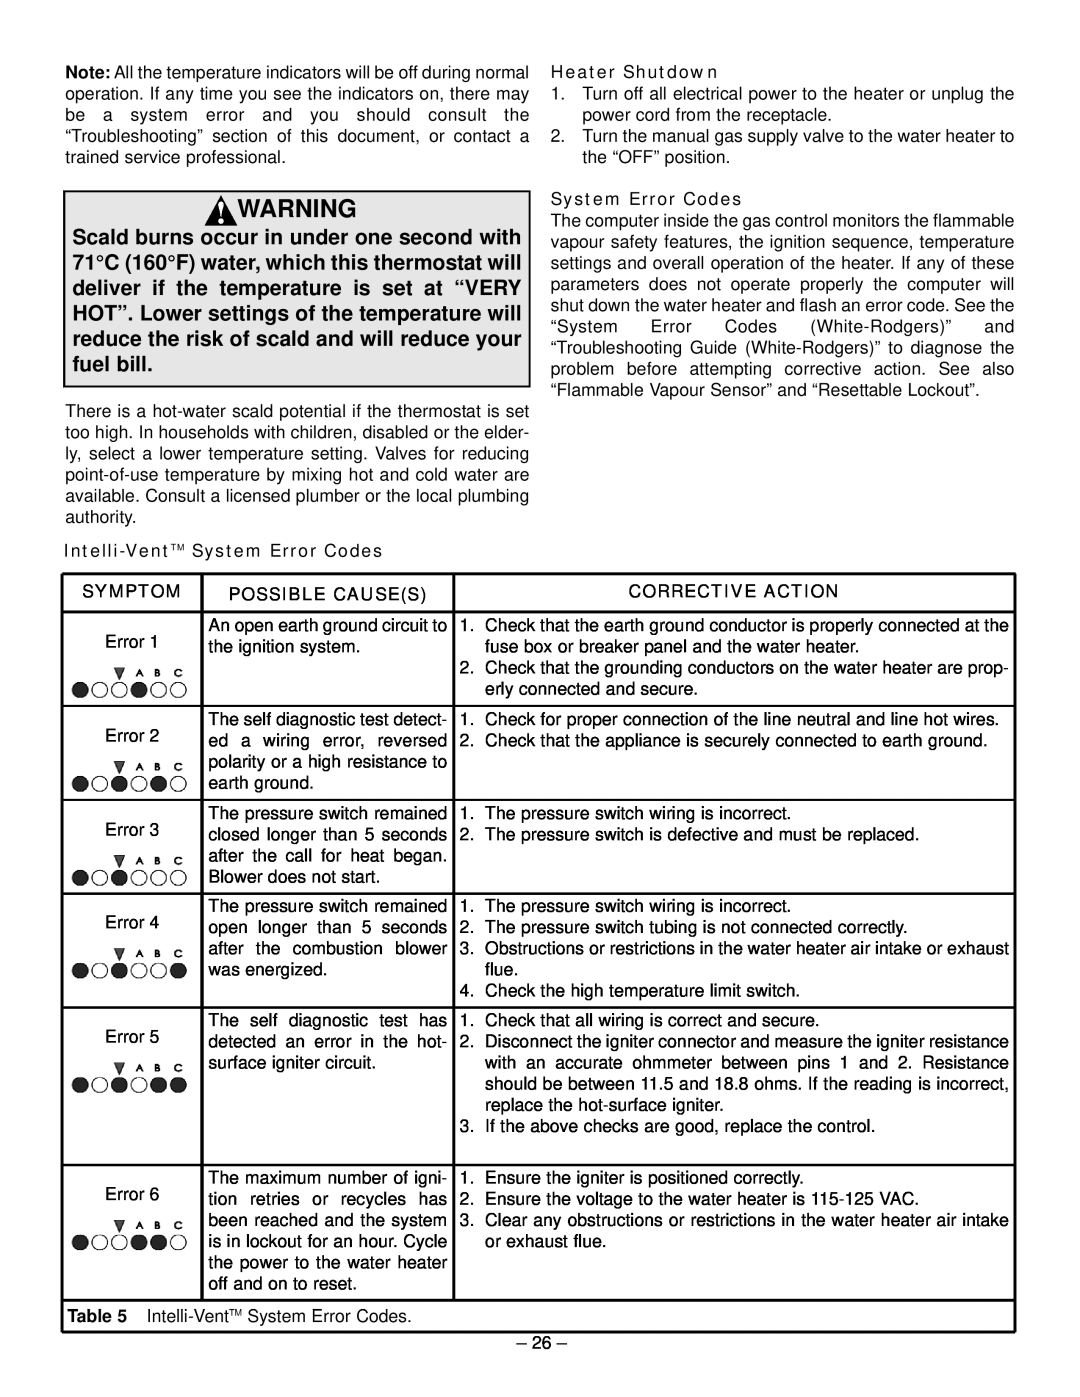 GSW 319594-000 manual Intelli-VentTM System Error Codes, Symptom, Possible Causes, Corrective Action, Heater Shutdown 